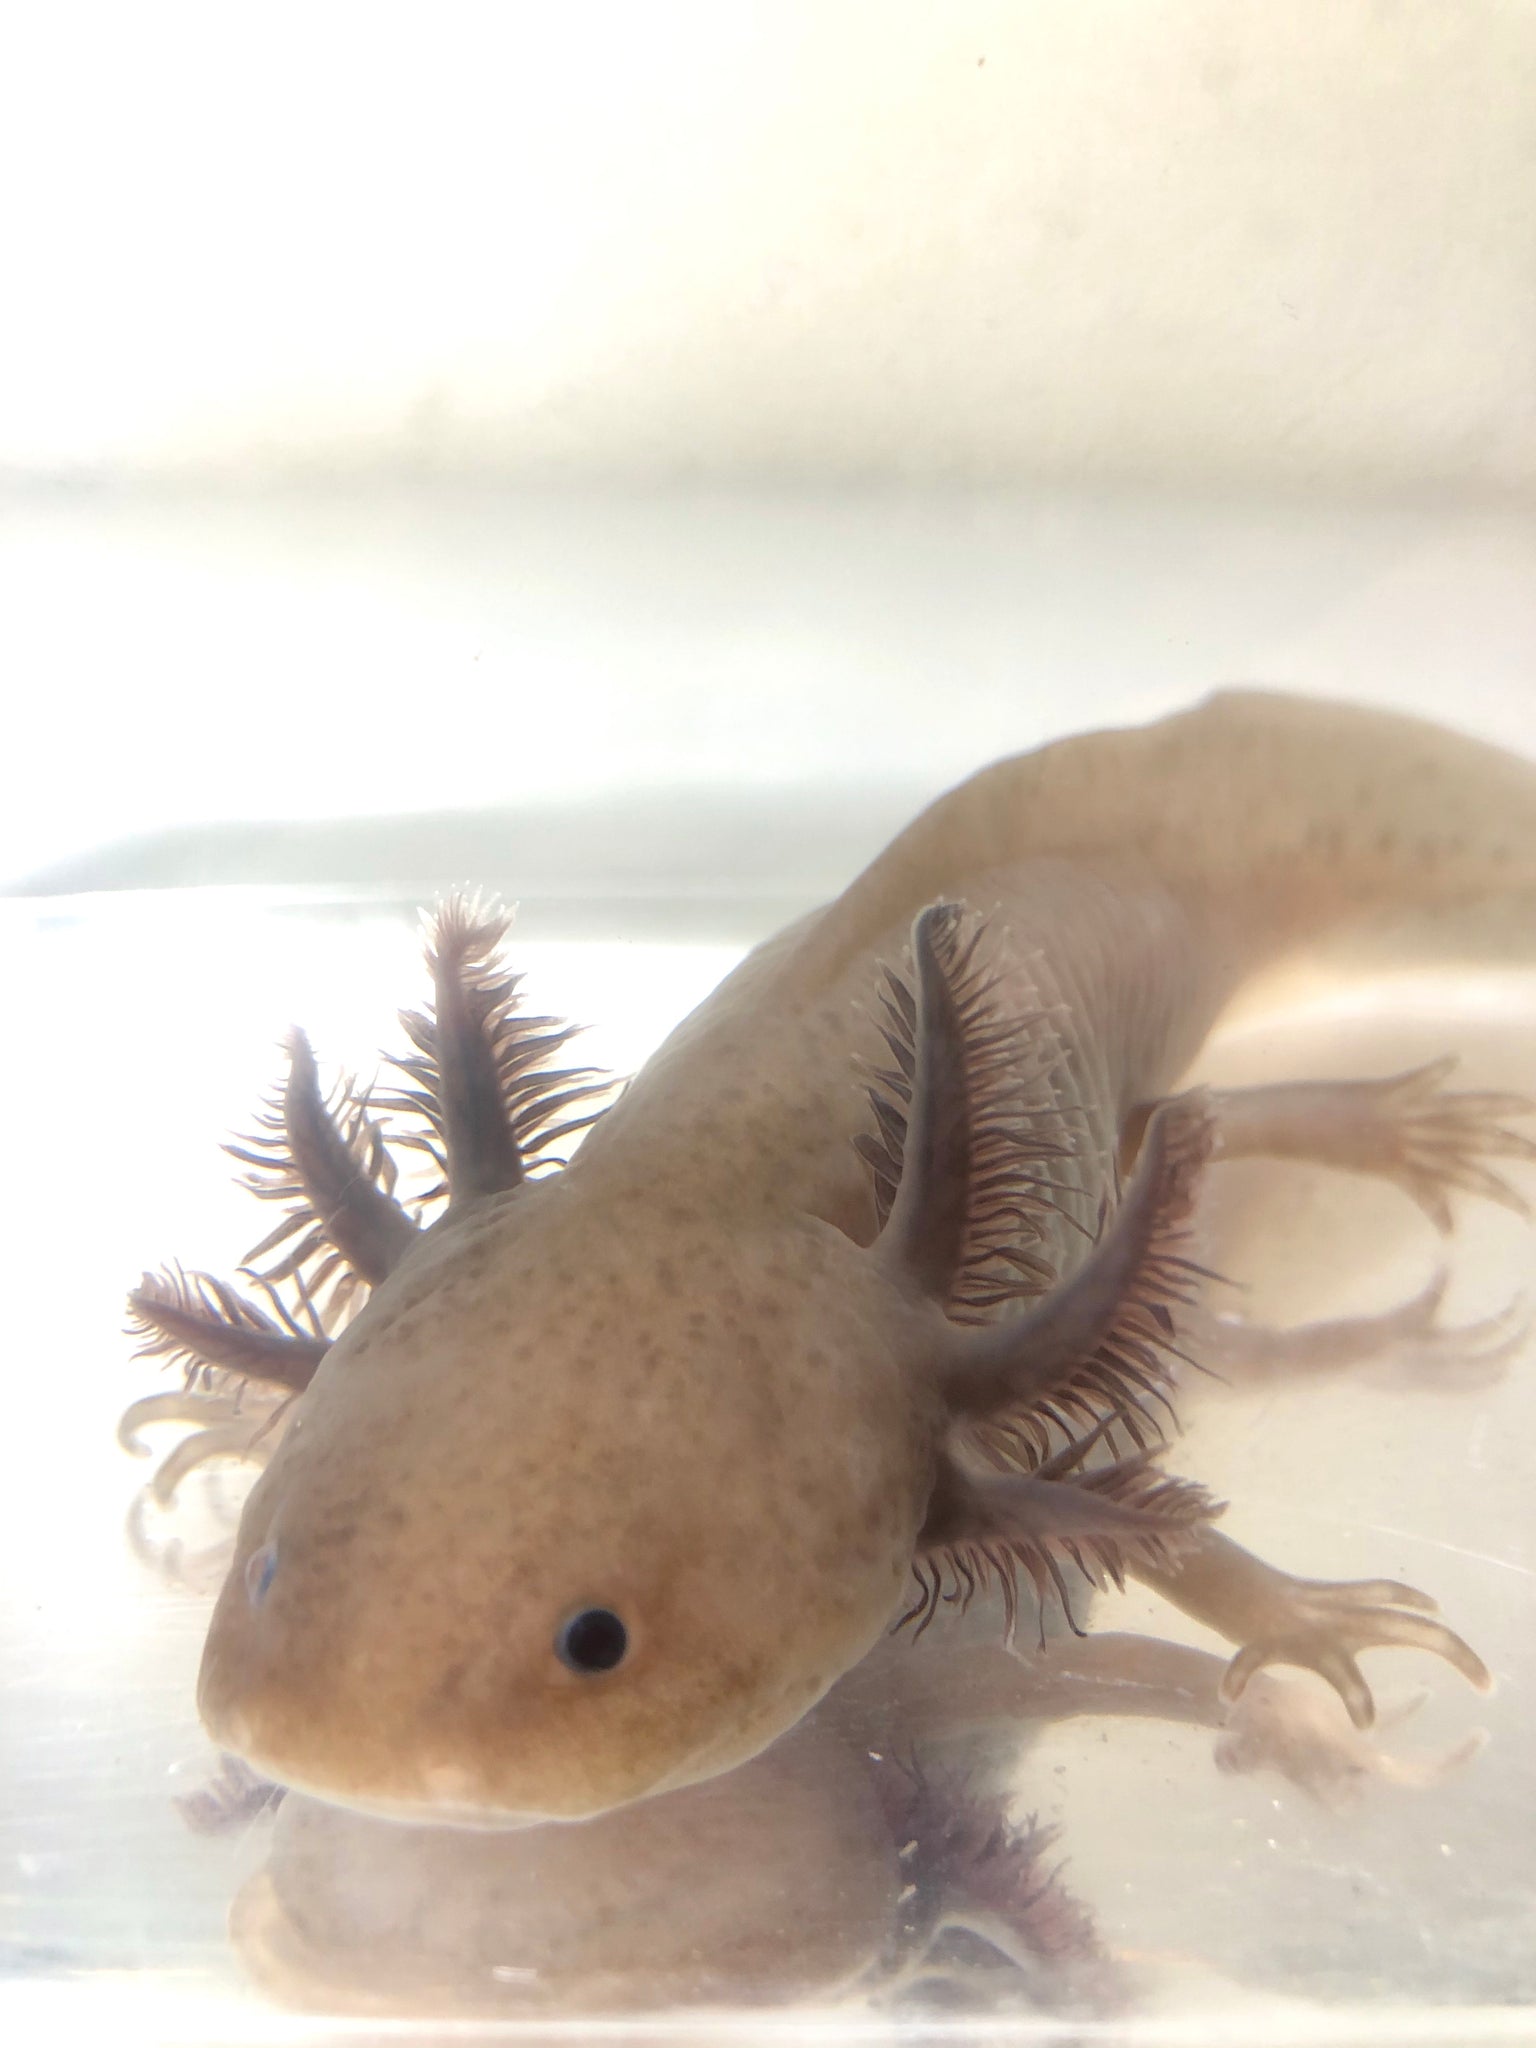 melanoid axolotl colors